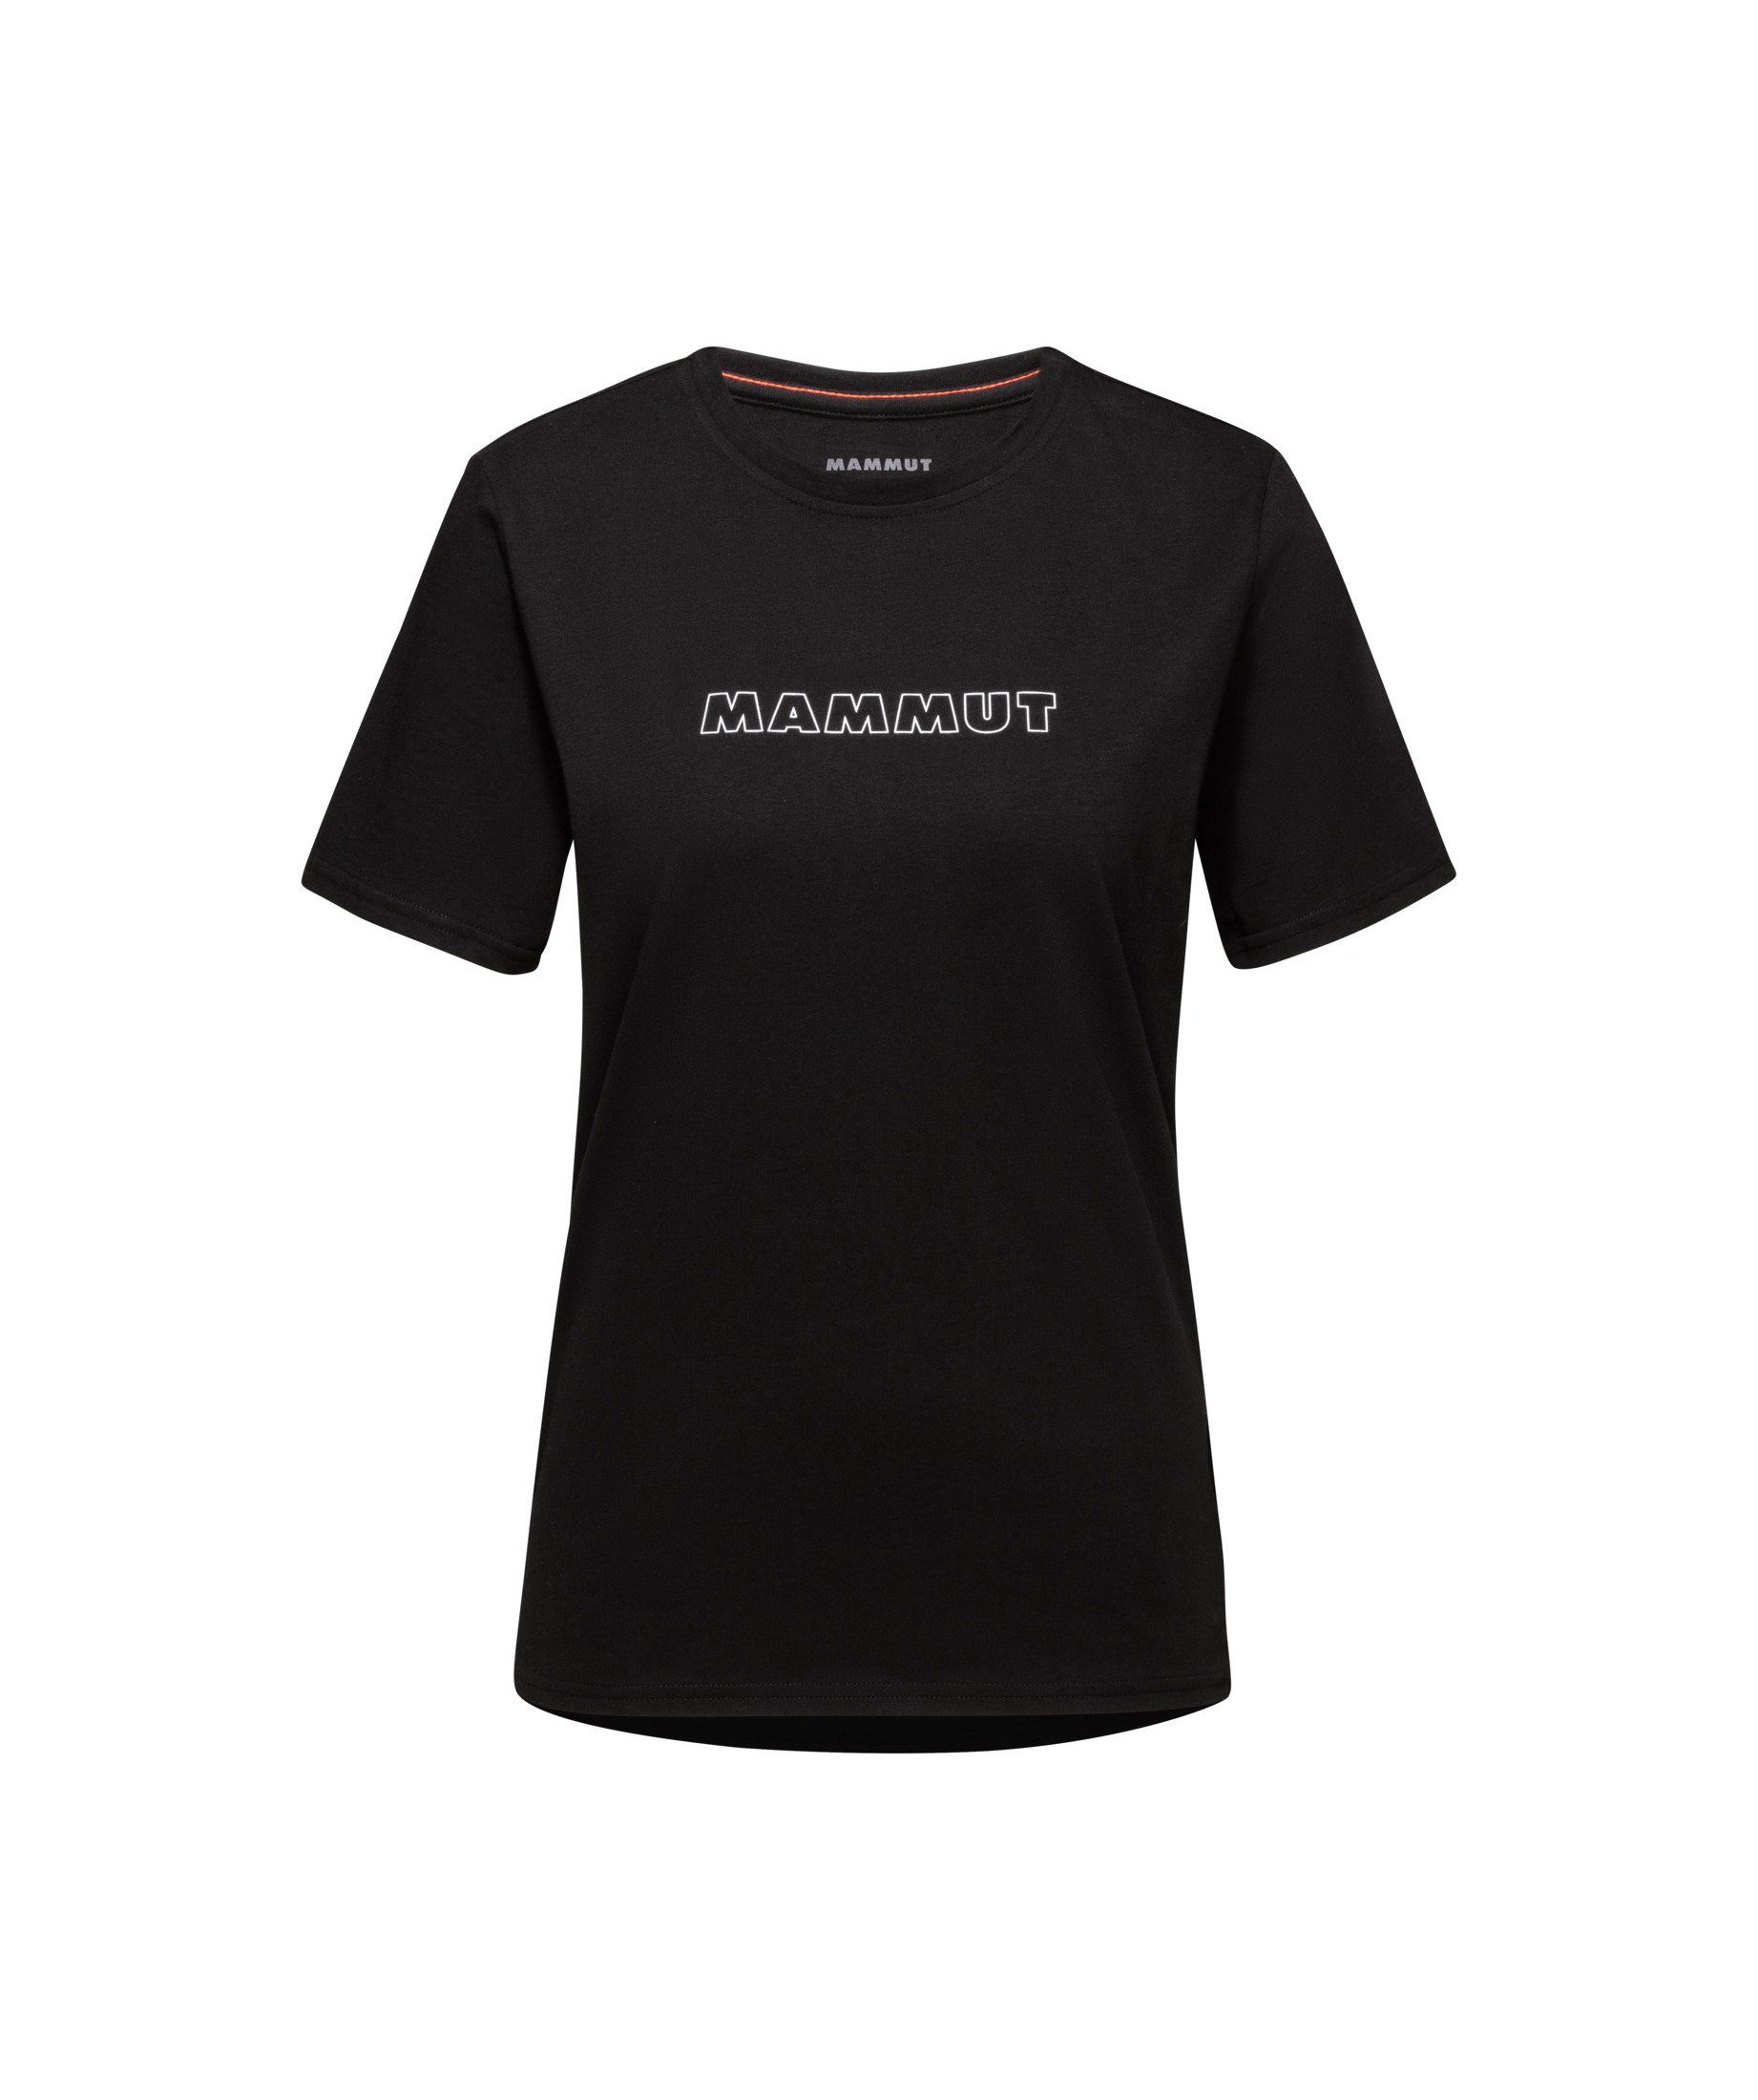 Mammut T-Shirt Core Mammut black T-Shirt Logo Women